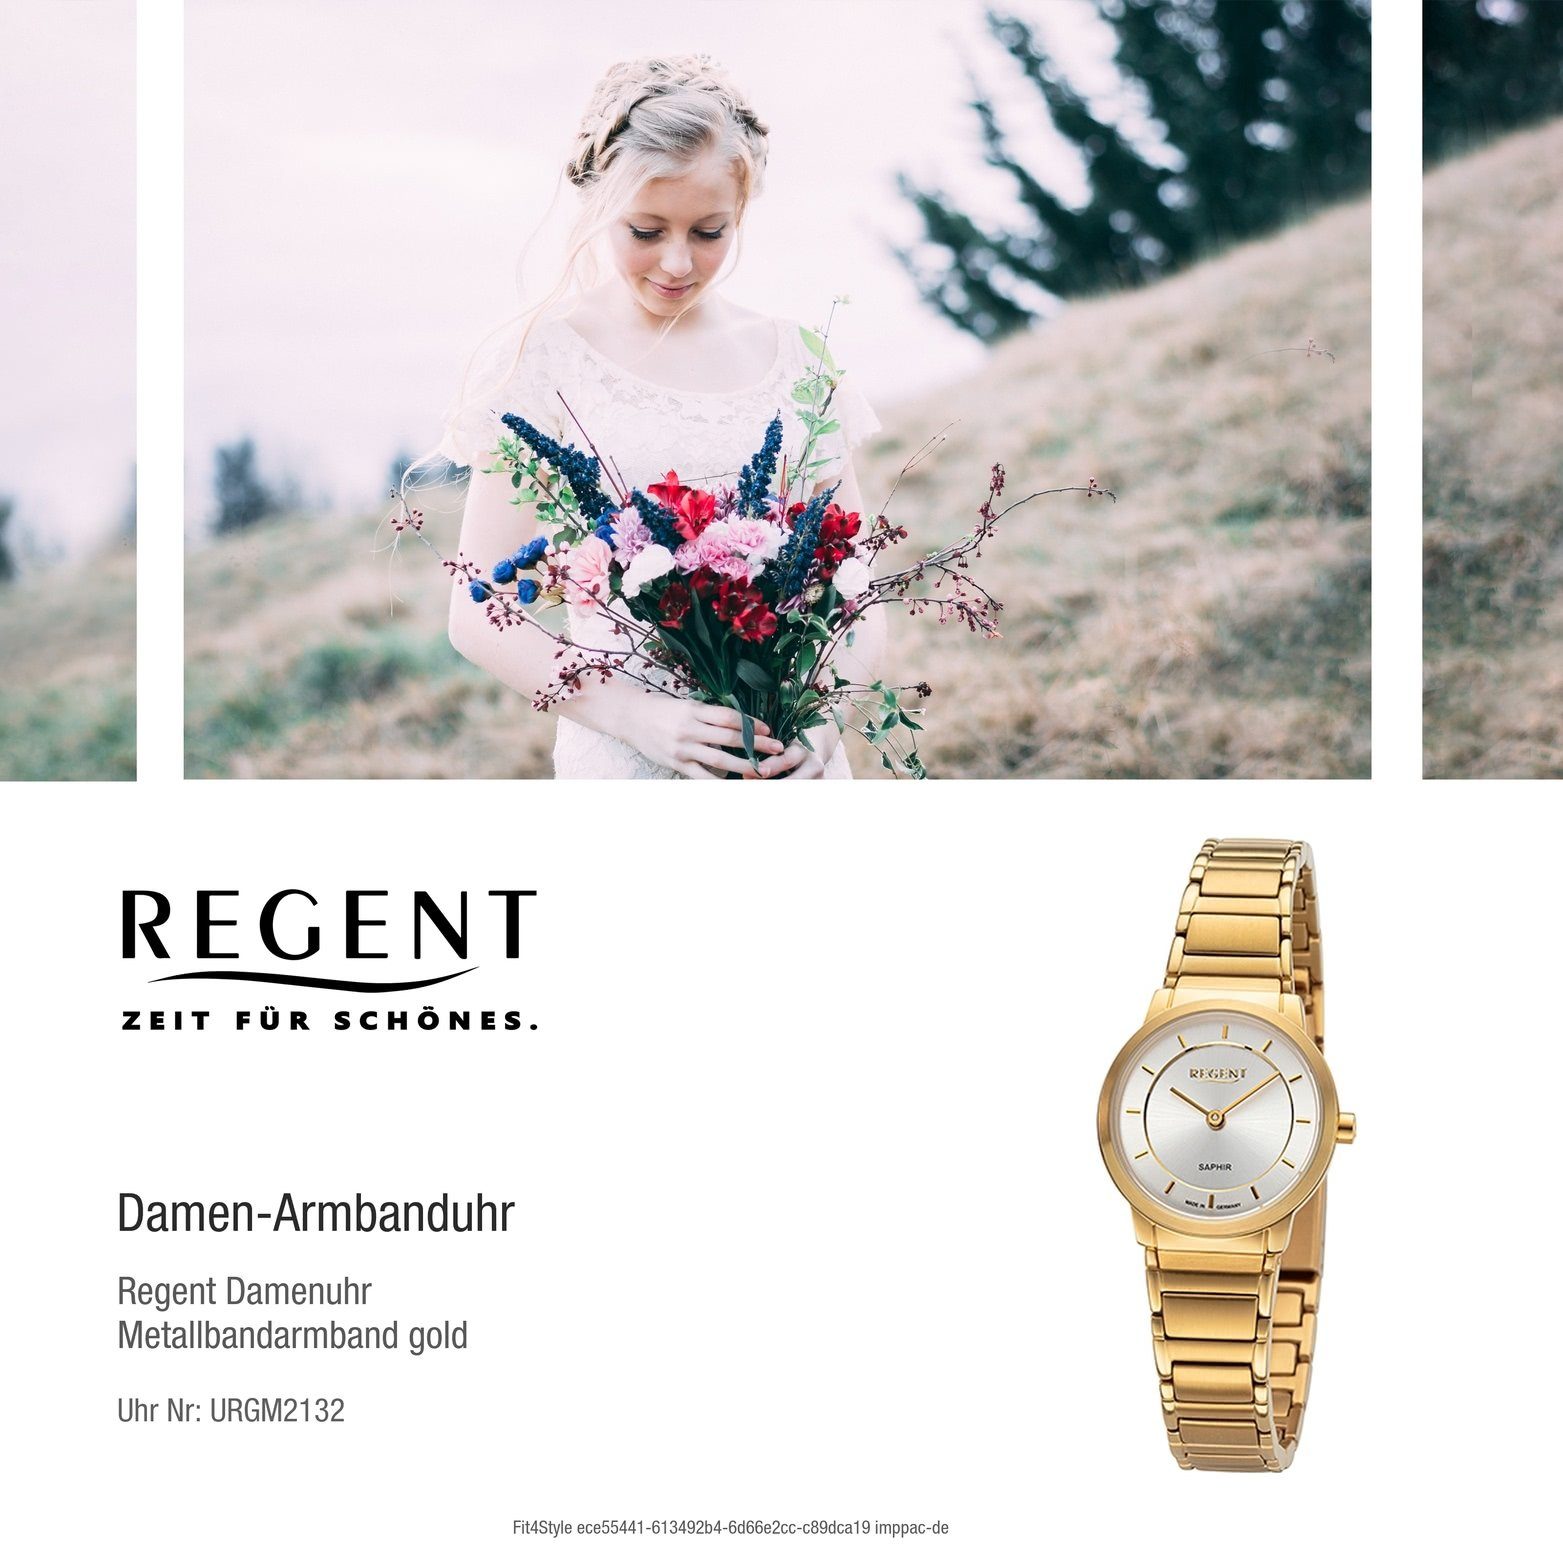 Regent klein Damen Damenuhr Gehäuse, gold, rundes Metallbandarmband 26,5mm) Armbanduhr (ca. Quarzuhr Analog, Regent